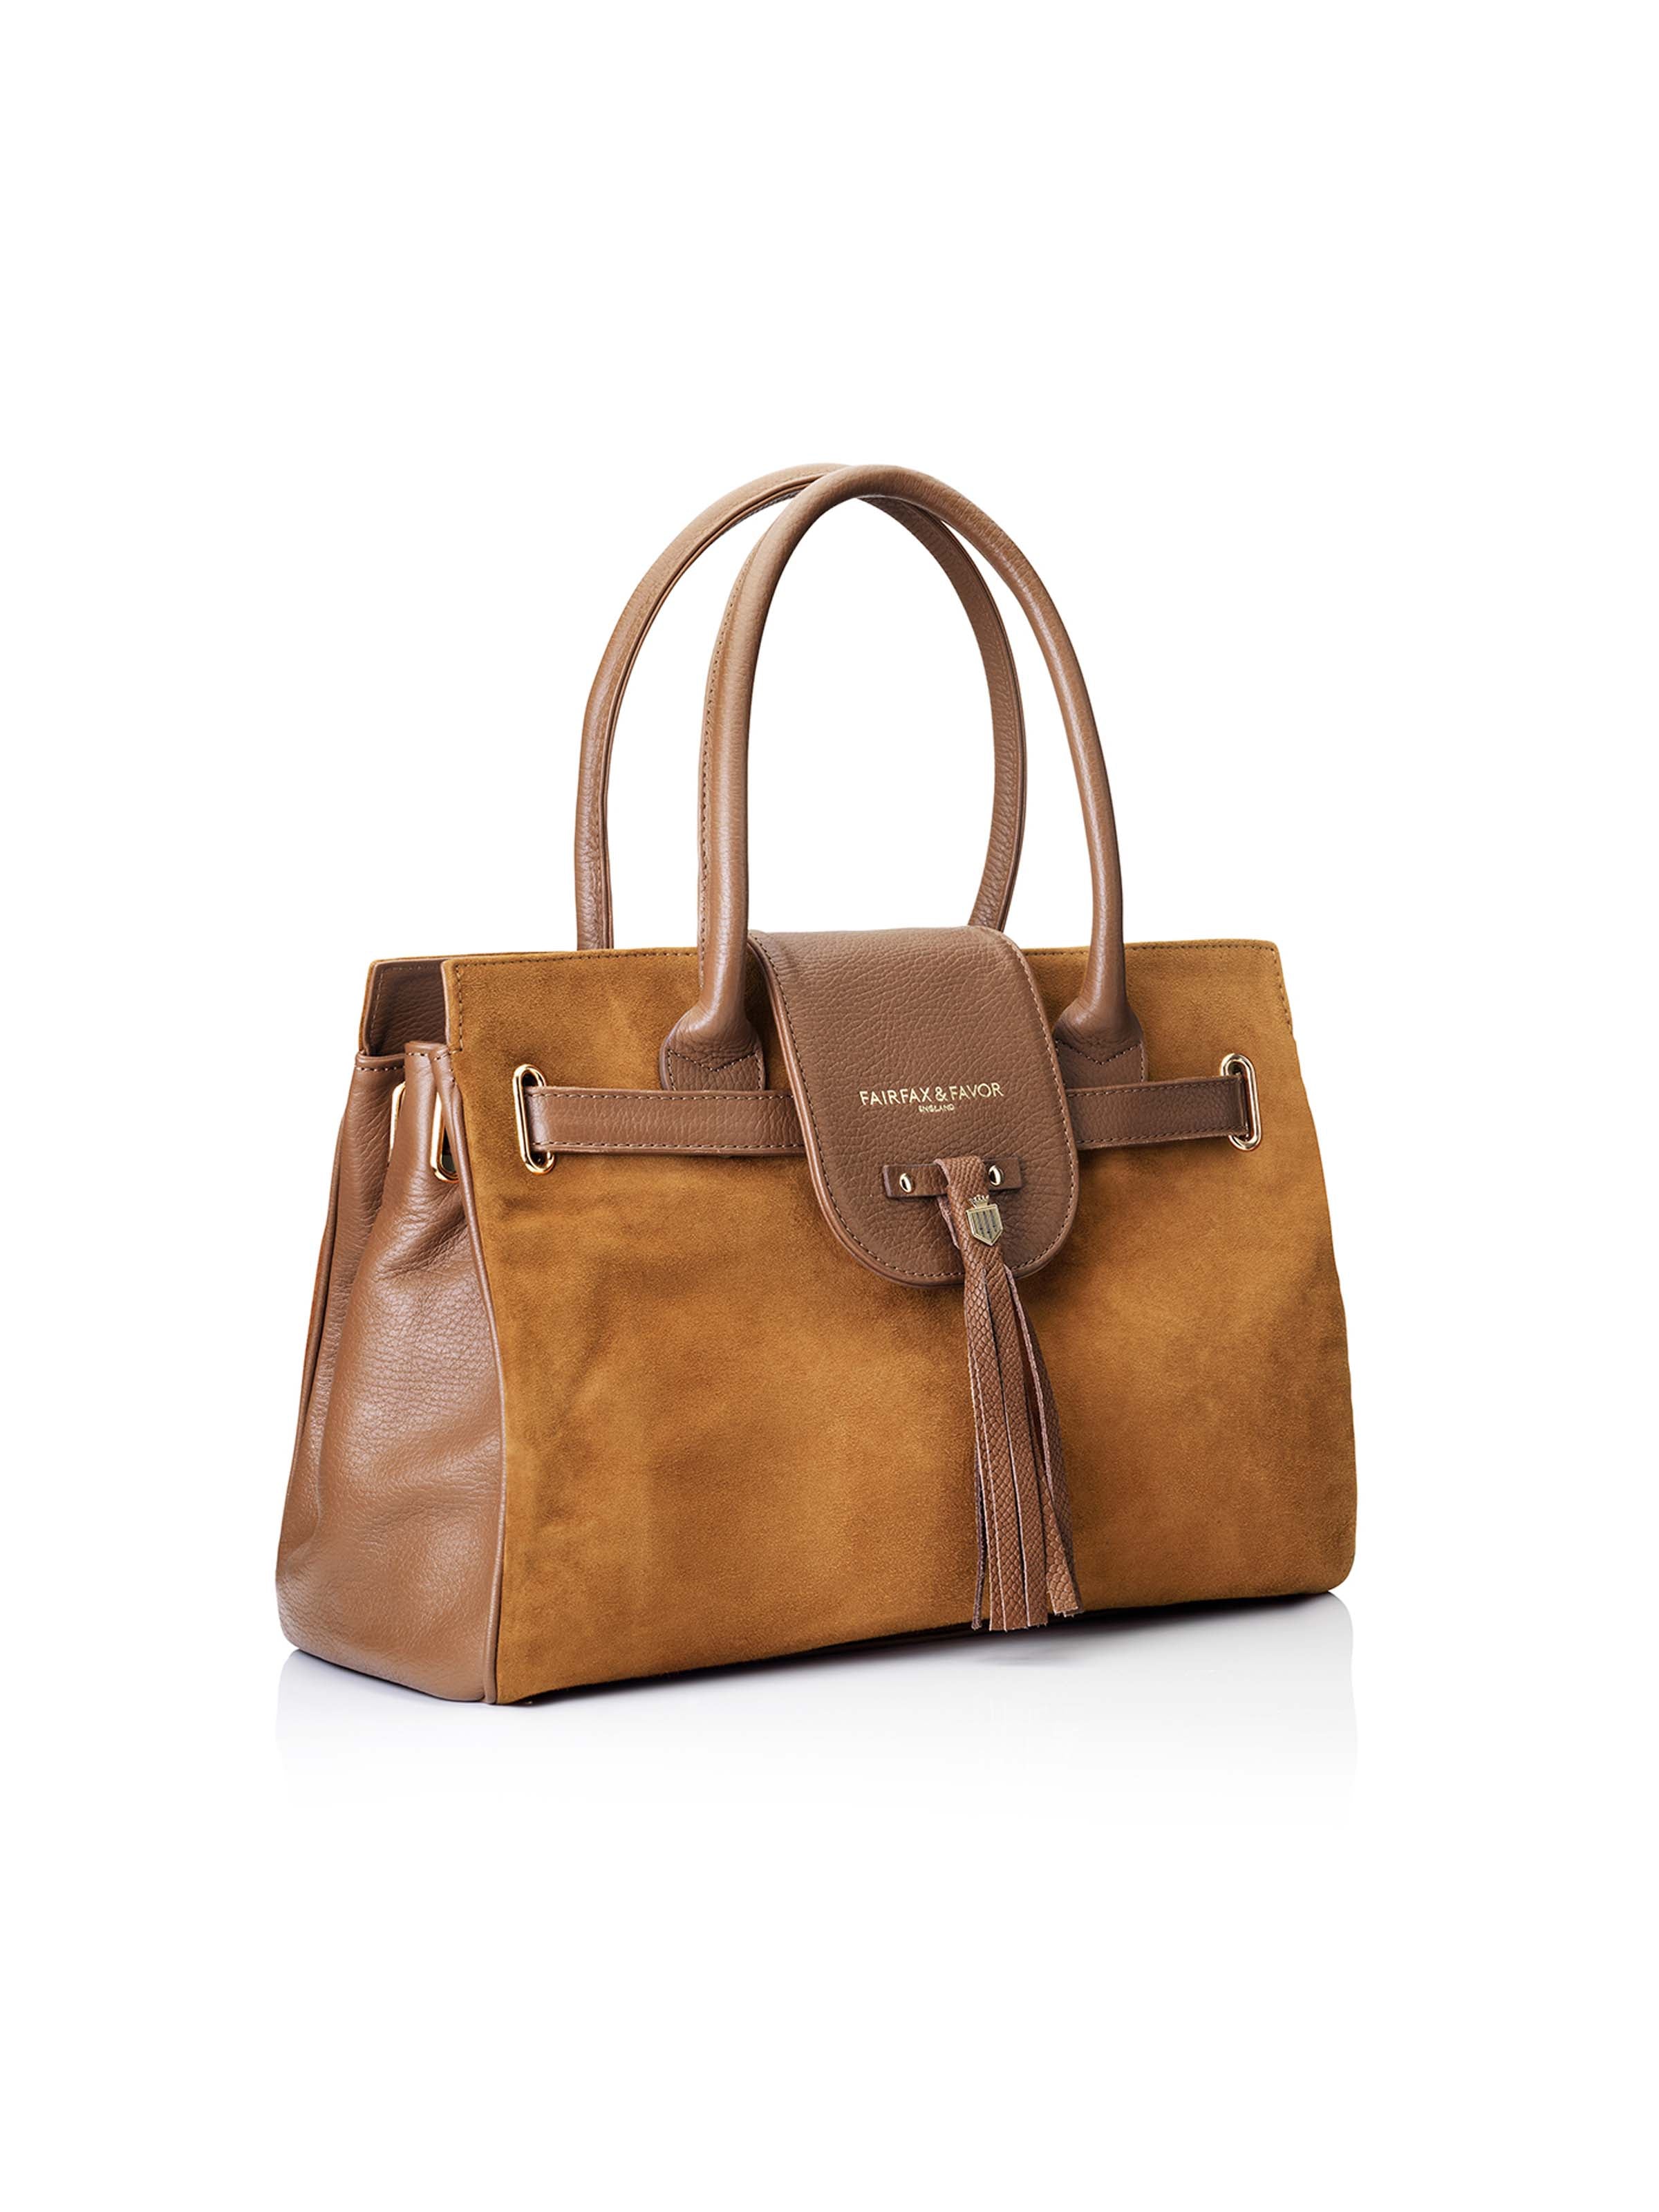 The Windsor Handbag - Tan Suede